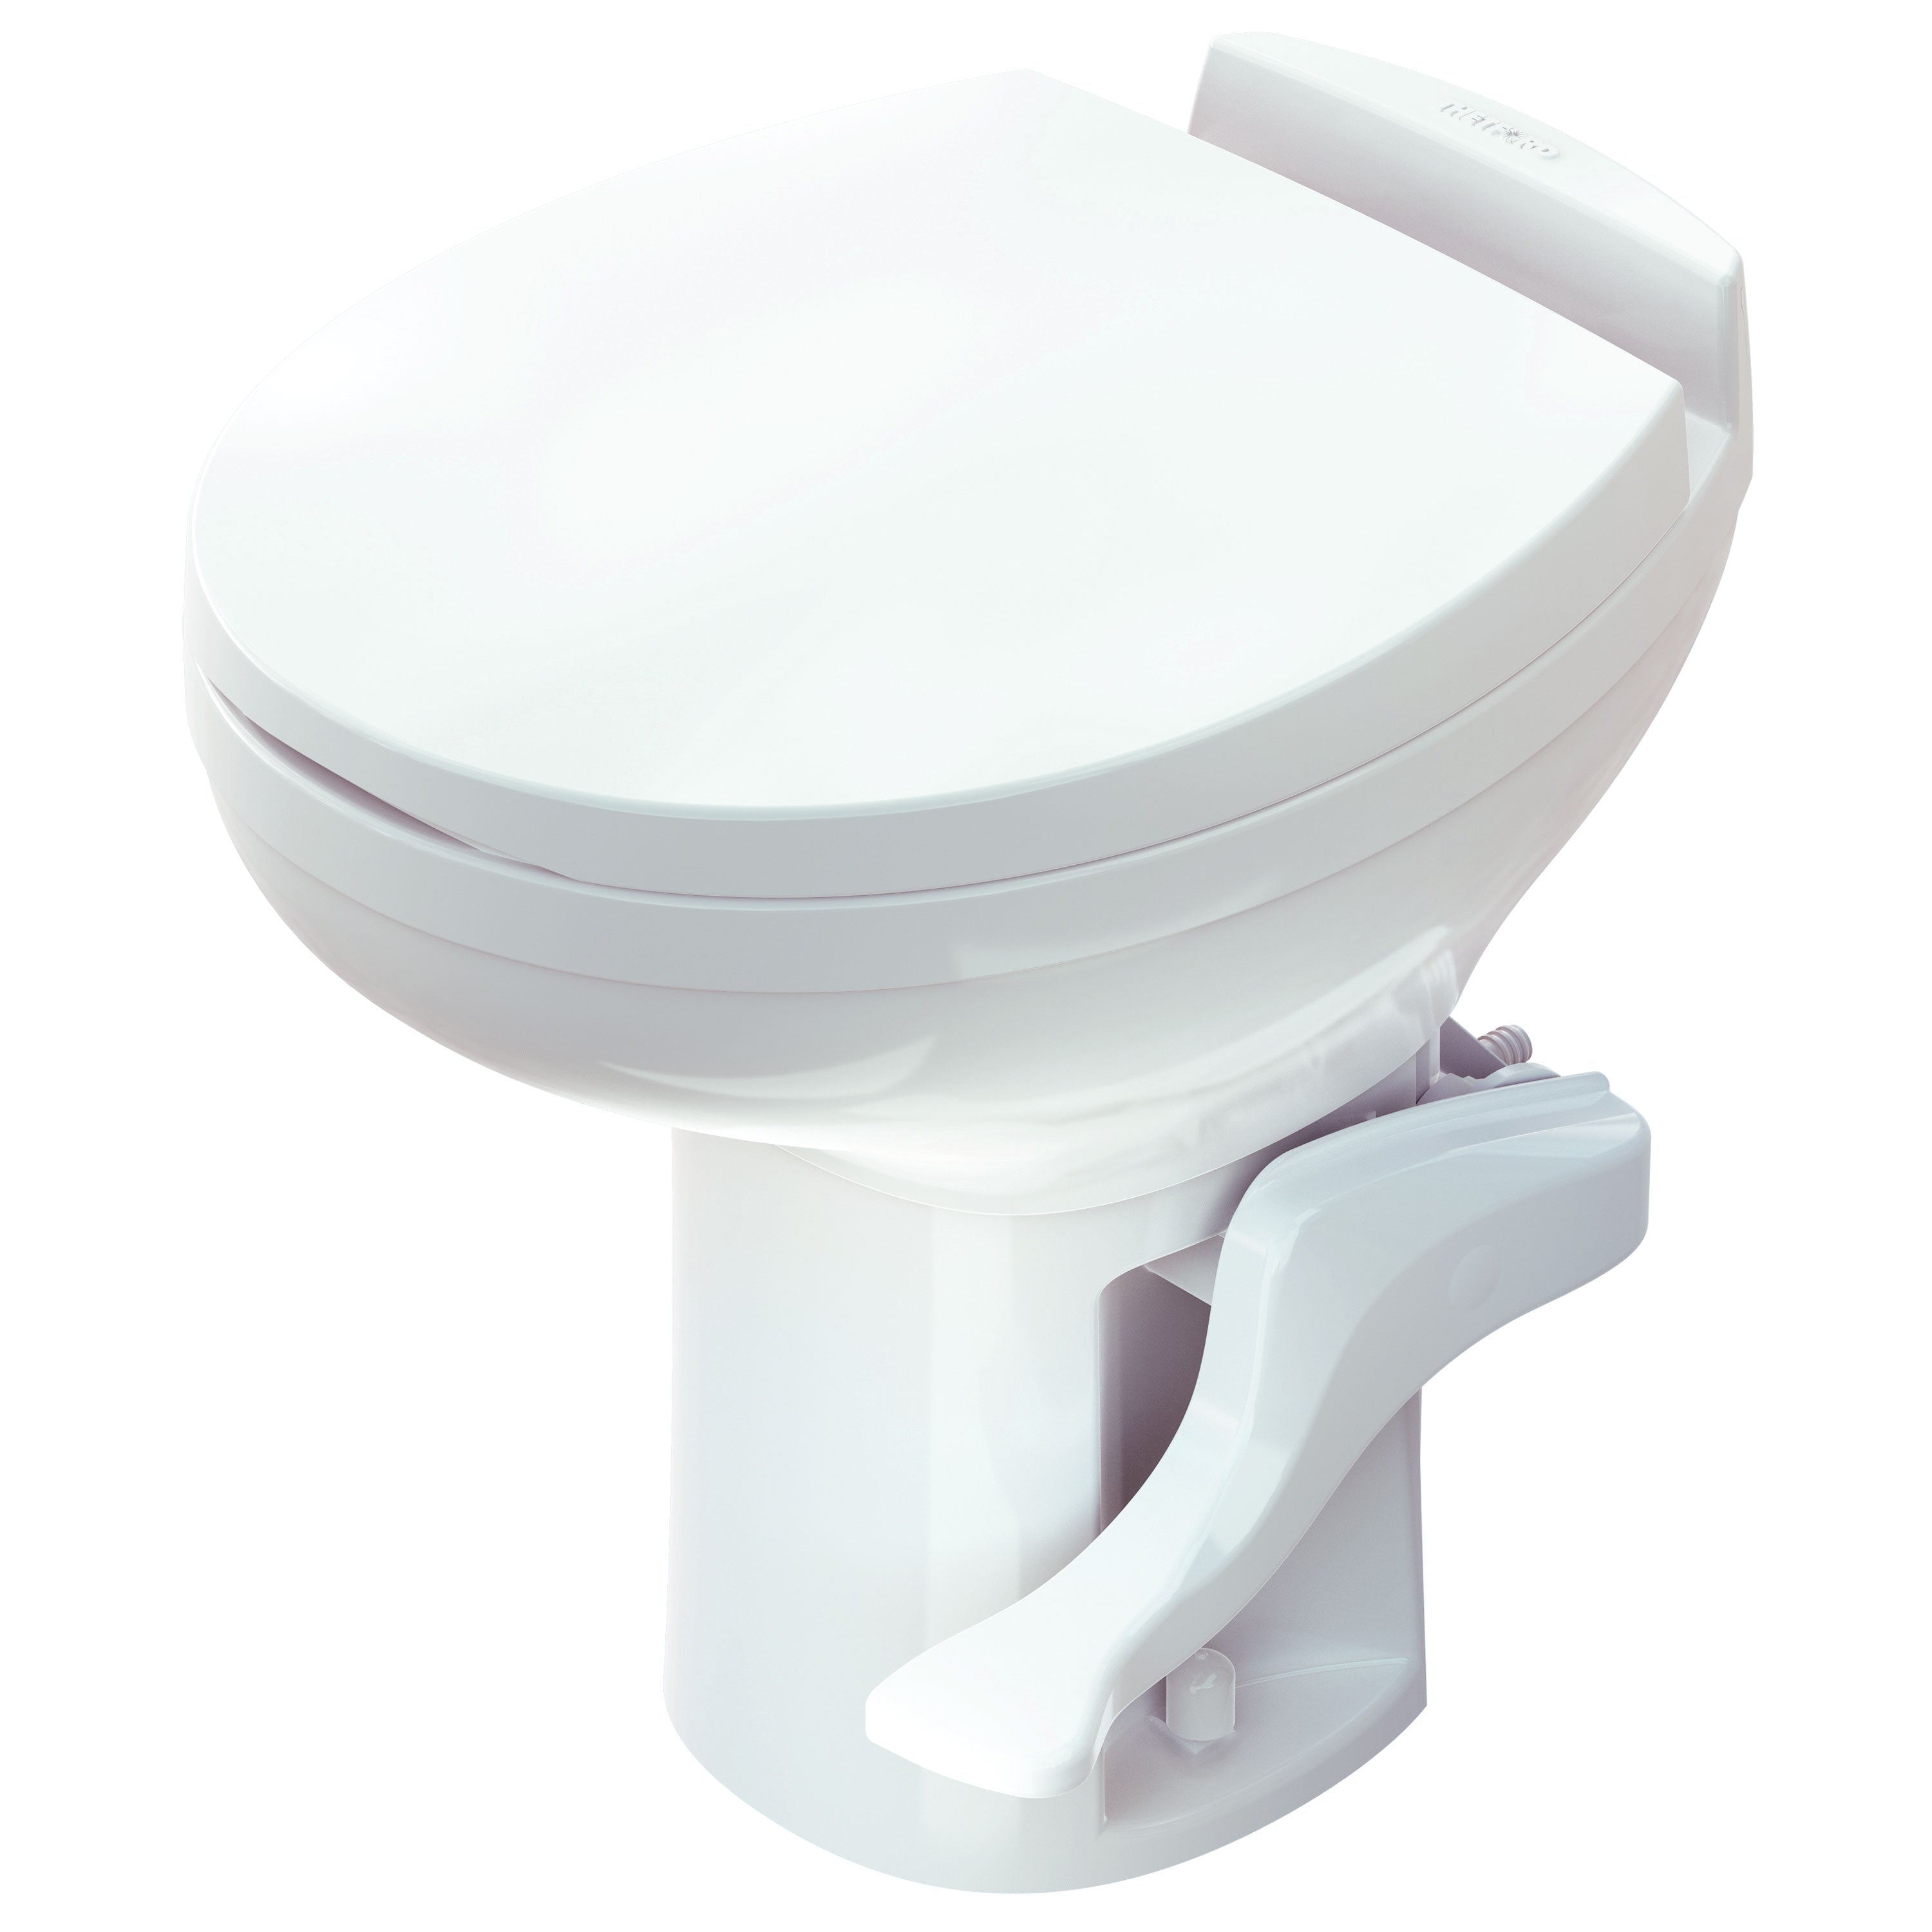 Thetford 42173 Aqua-Magic Residence RV Toilet with Water Saver - High Profile, White